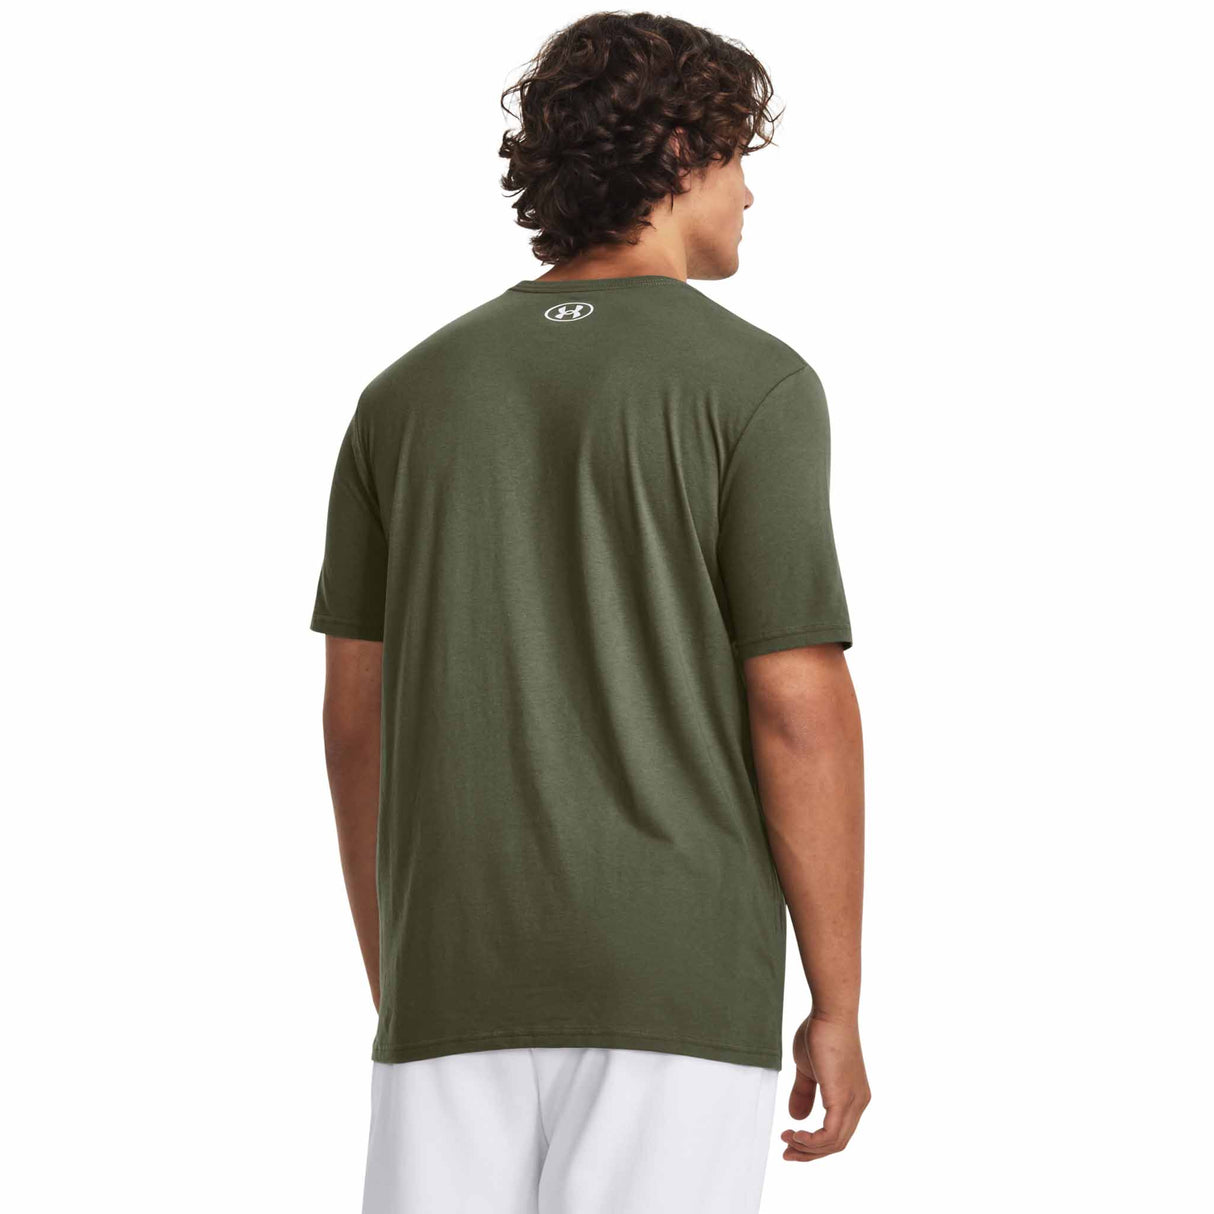 Under Armour Camo t-shirt à manches courtes homme dos- Marine OD Green / Black / White